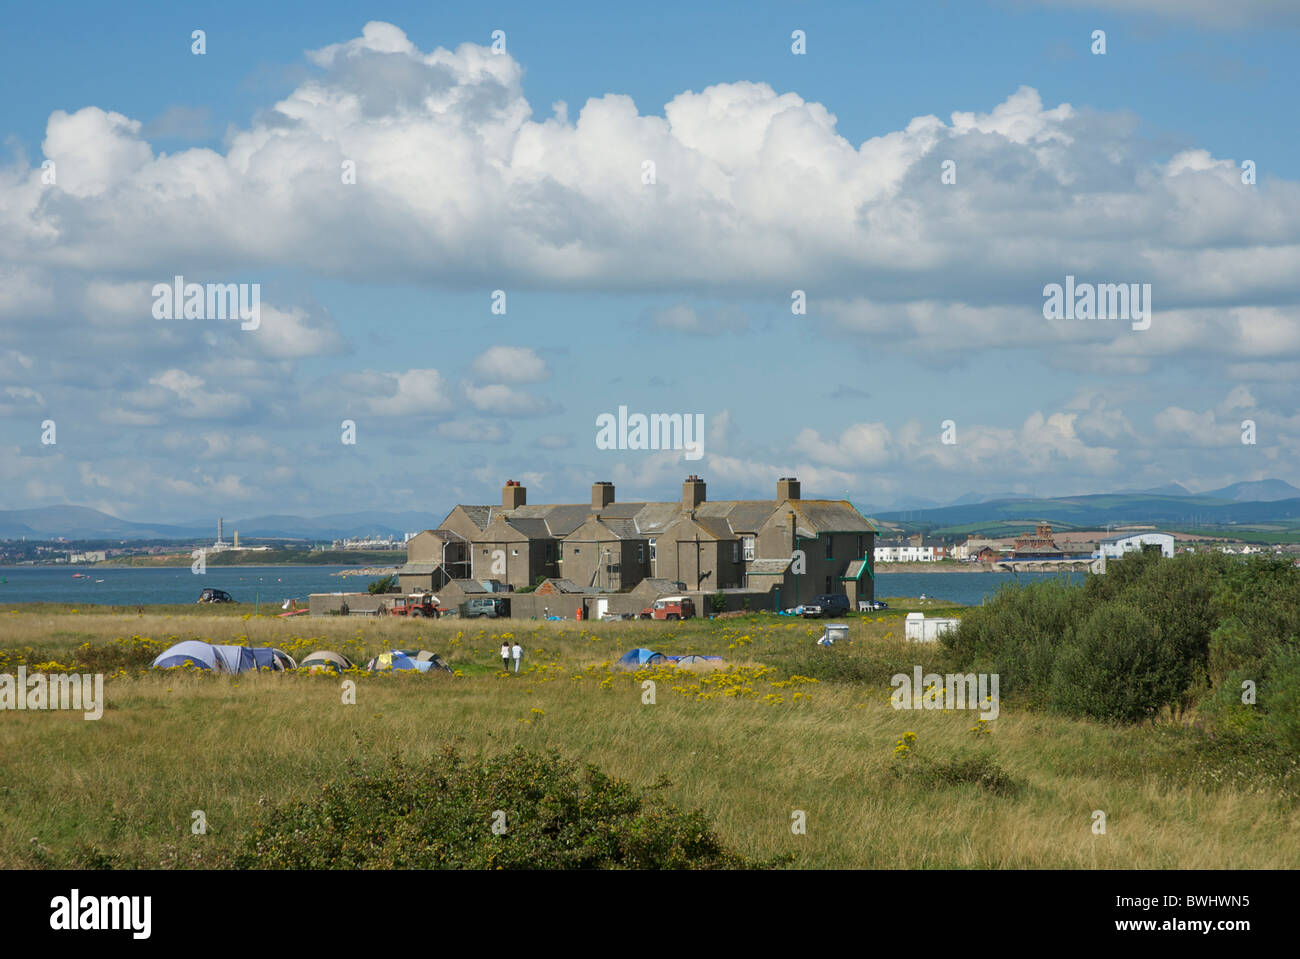 Terrace of houses on Piel Island, near Barrow-in-Furness, Cumbria, England UK Stock Photo